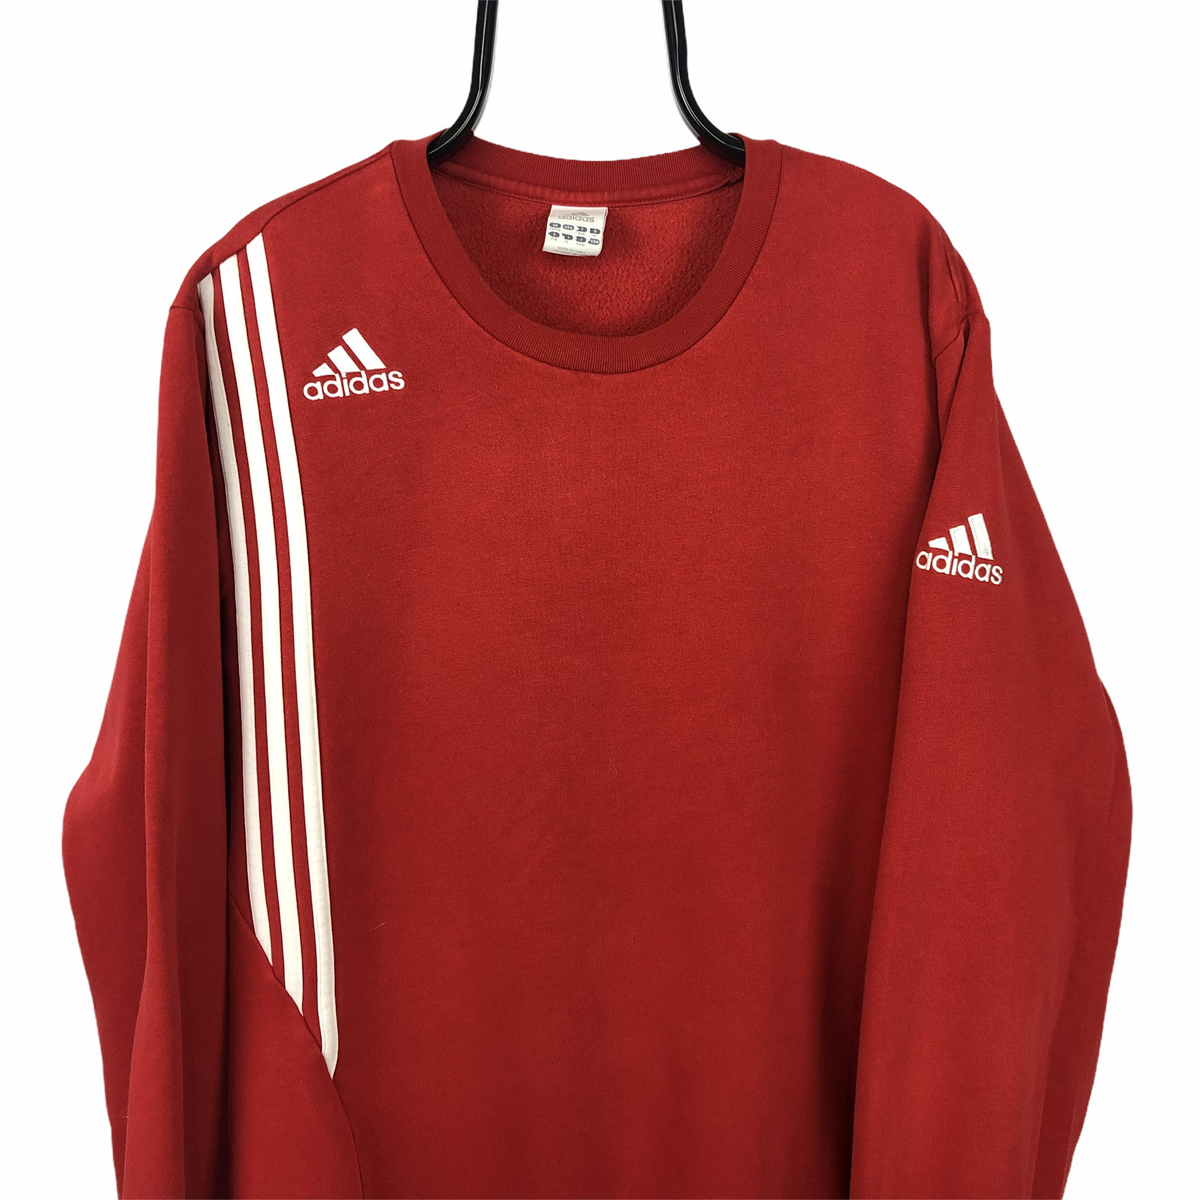 Adidas Logo Sweatshirt in - Men's - Vintique Clothing